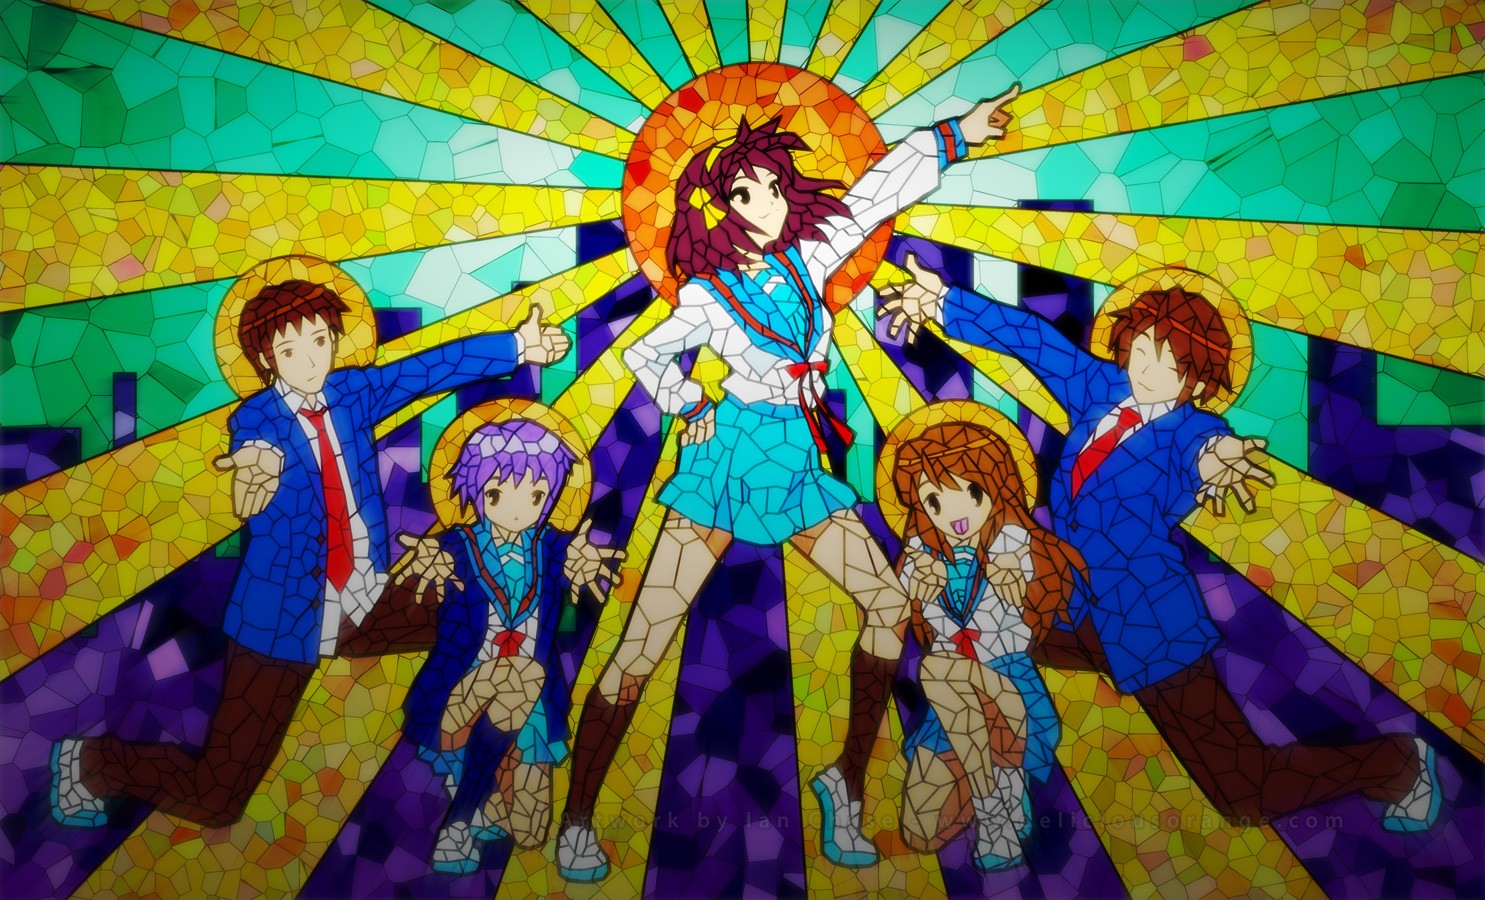 Anime 1485x900 The Melancholy of Haruhi Suzumiya Suzumiya Haruhi anime girls stained glass tie anime boys